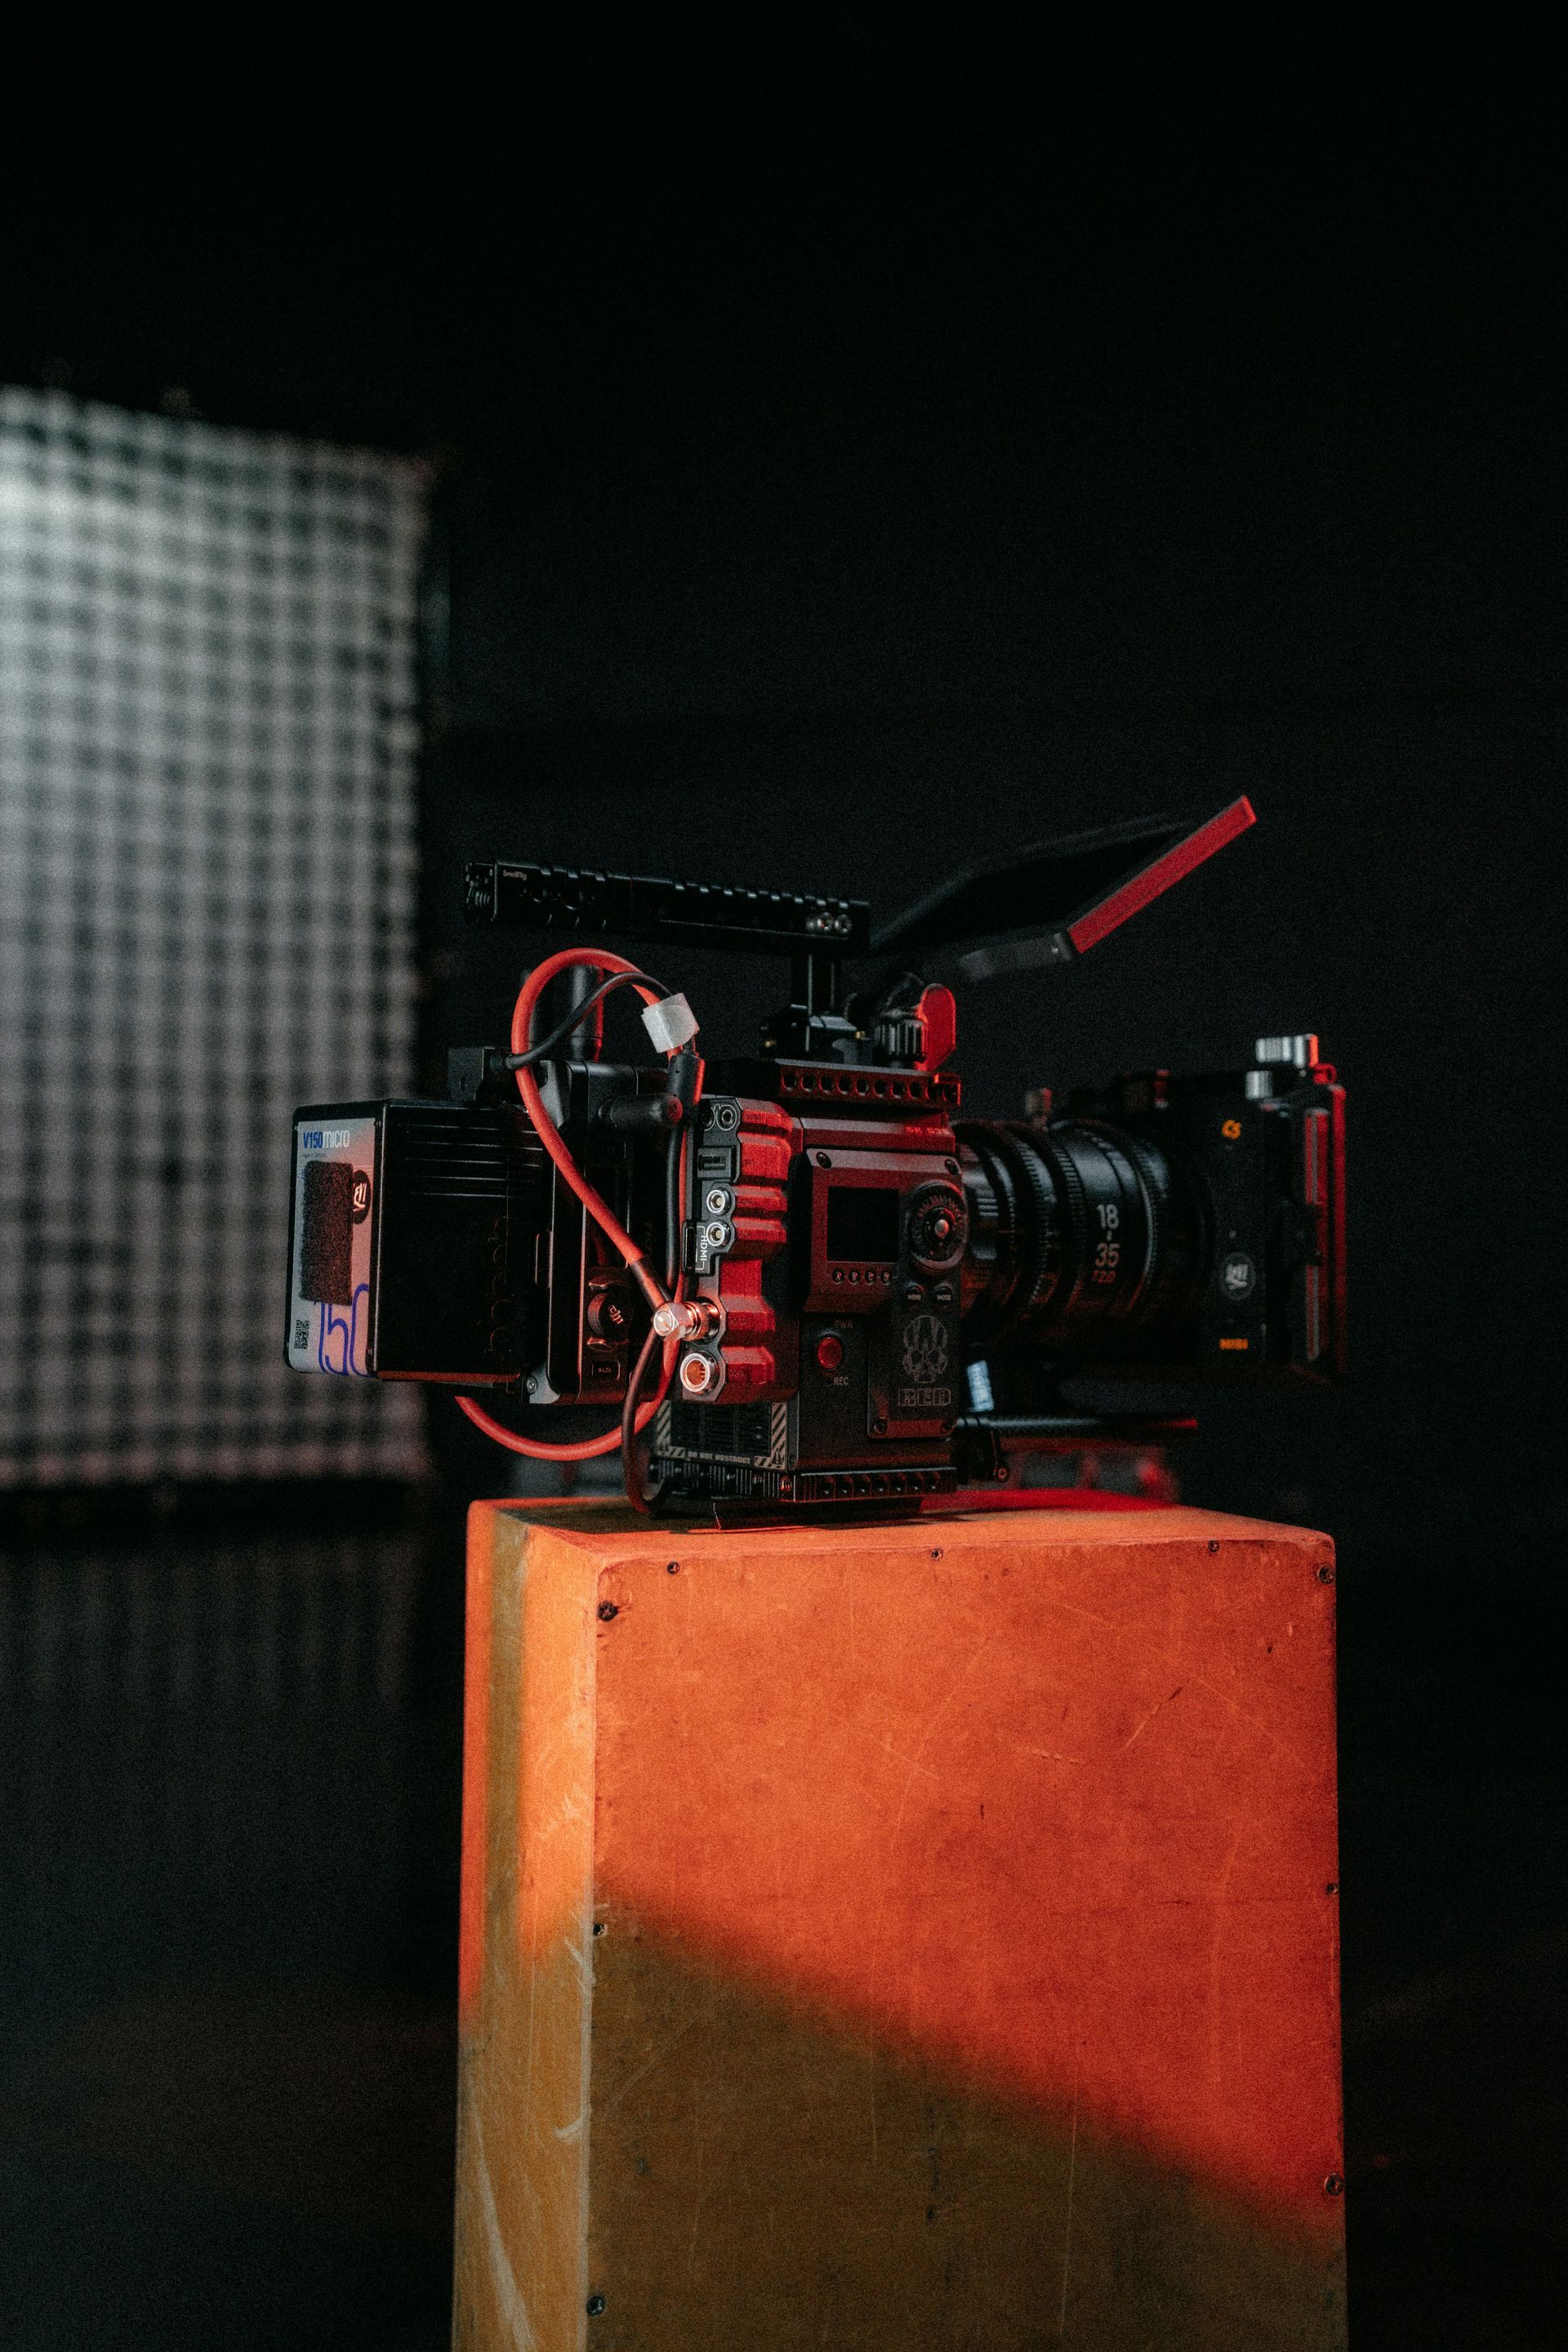 Cinema digital film camera sitting on an apple box